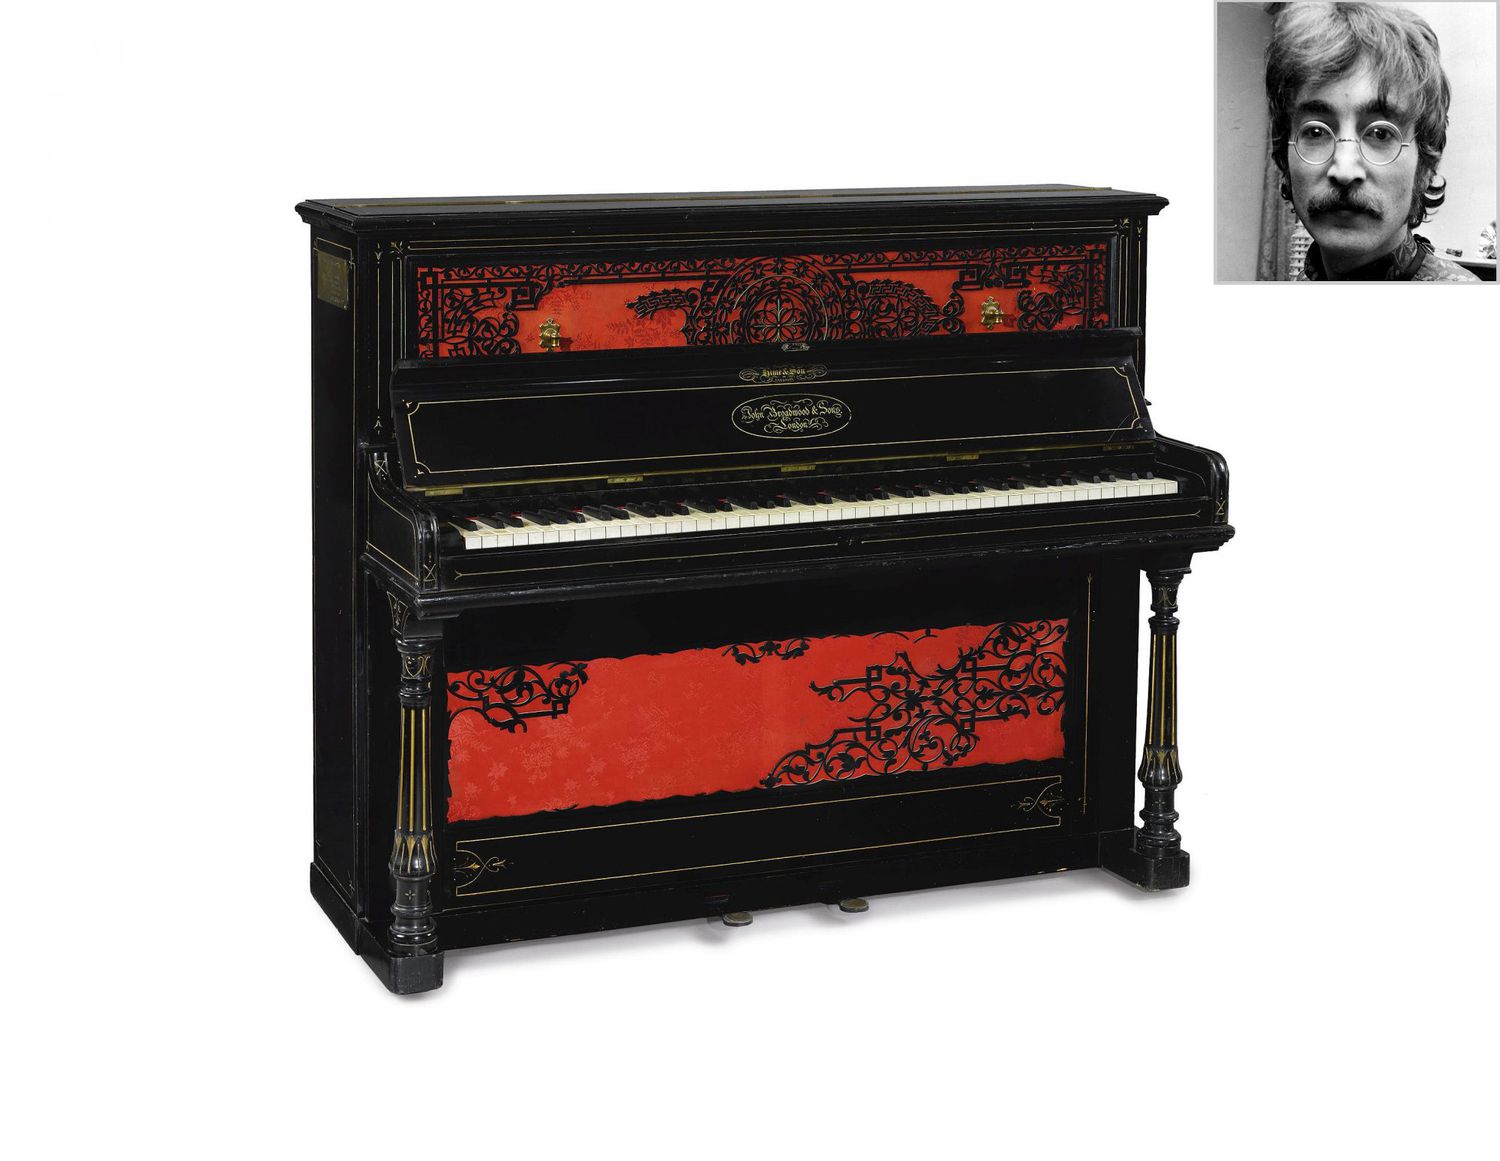 Auction of John Lennon piano, New York, UK - Dec 2016